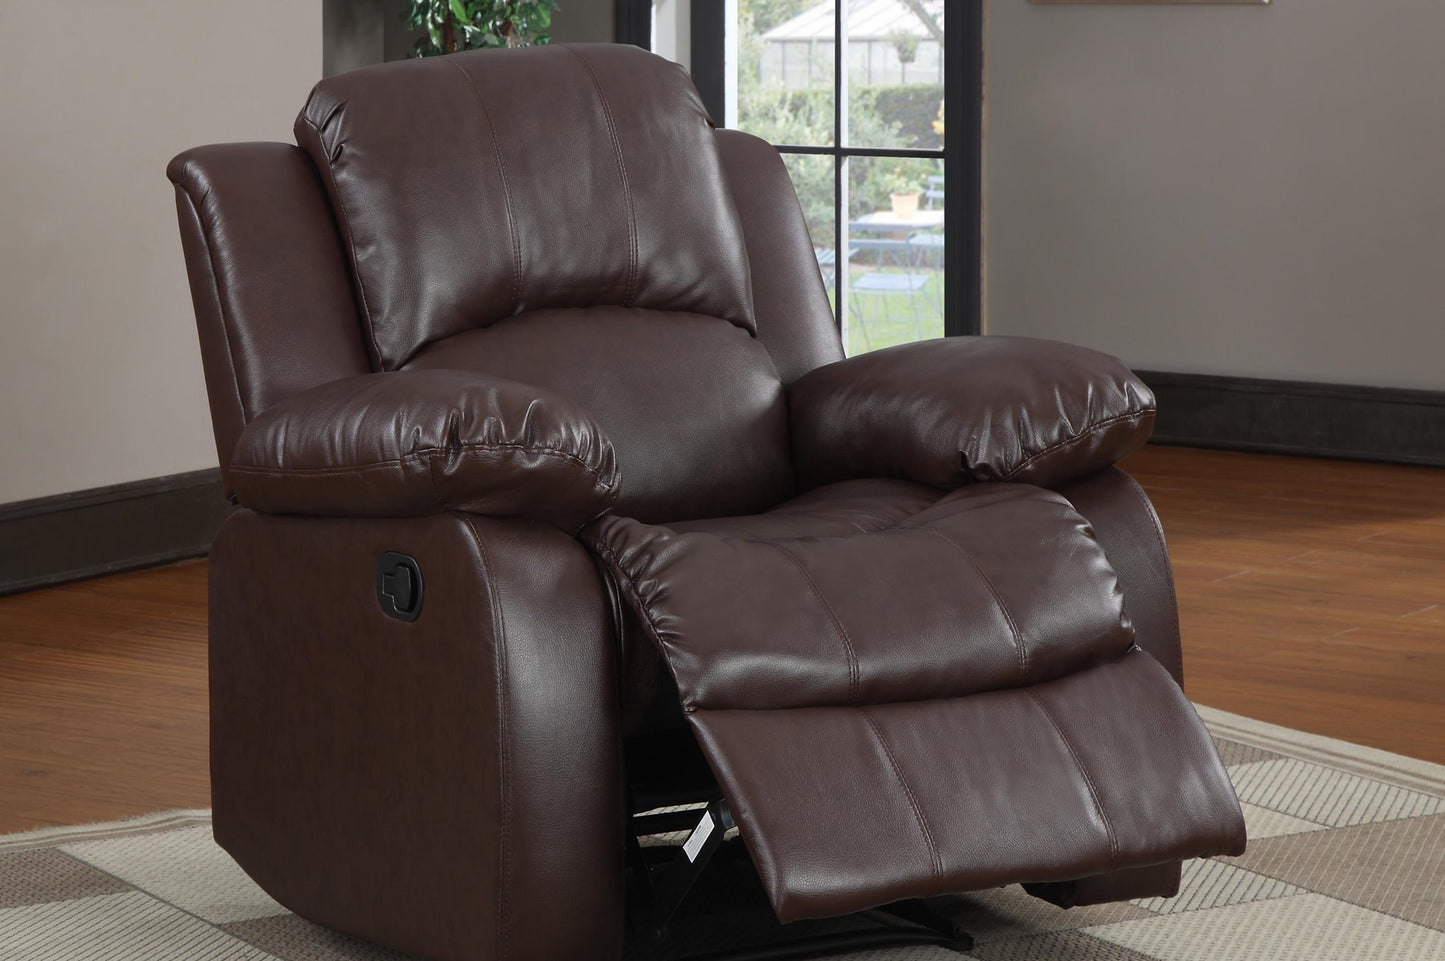 Homelegance Cranley Recliner Chair in Leather - Brown